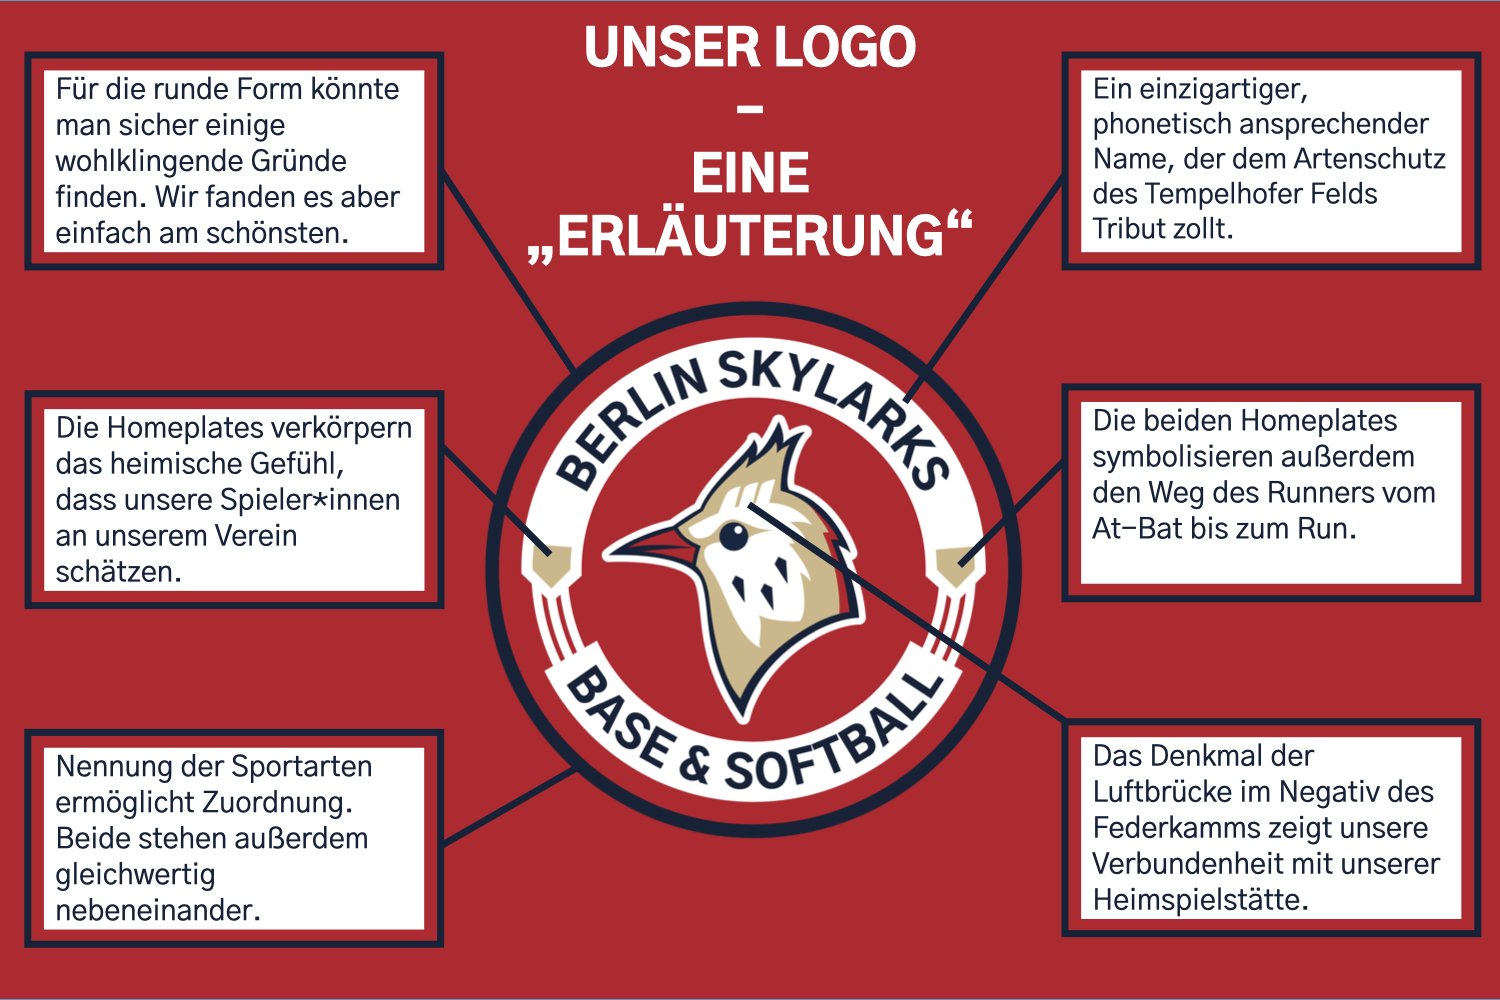 Berlin Skylarks Logo Roundell Storytelling